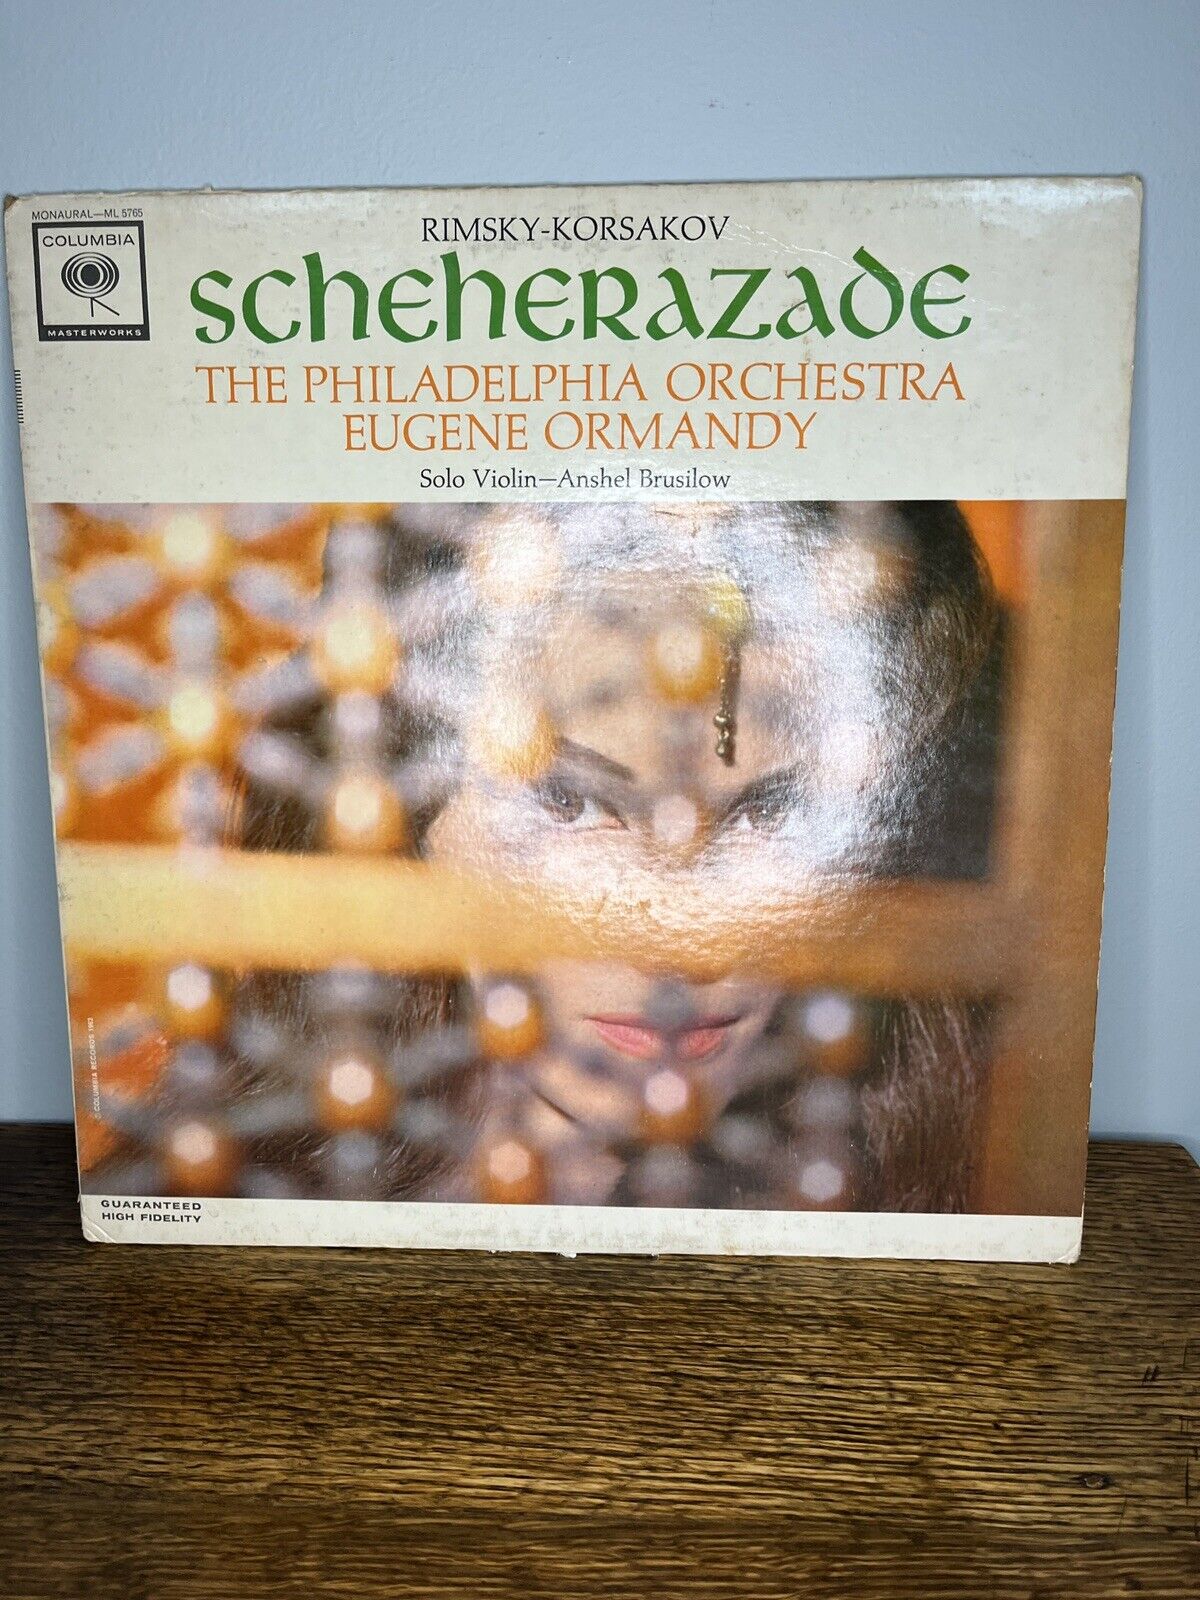 Scheherazade Philadelphia Orchestra Vintage Album LP Record